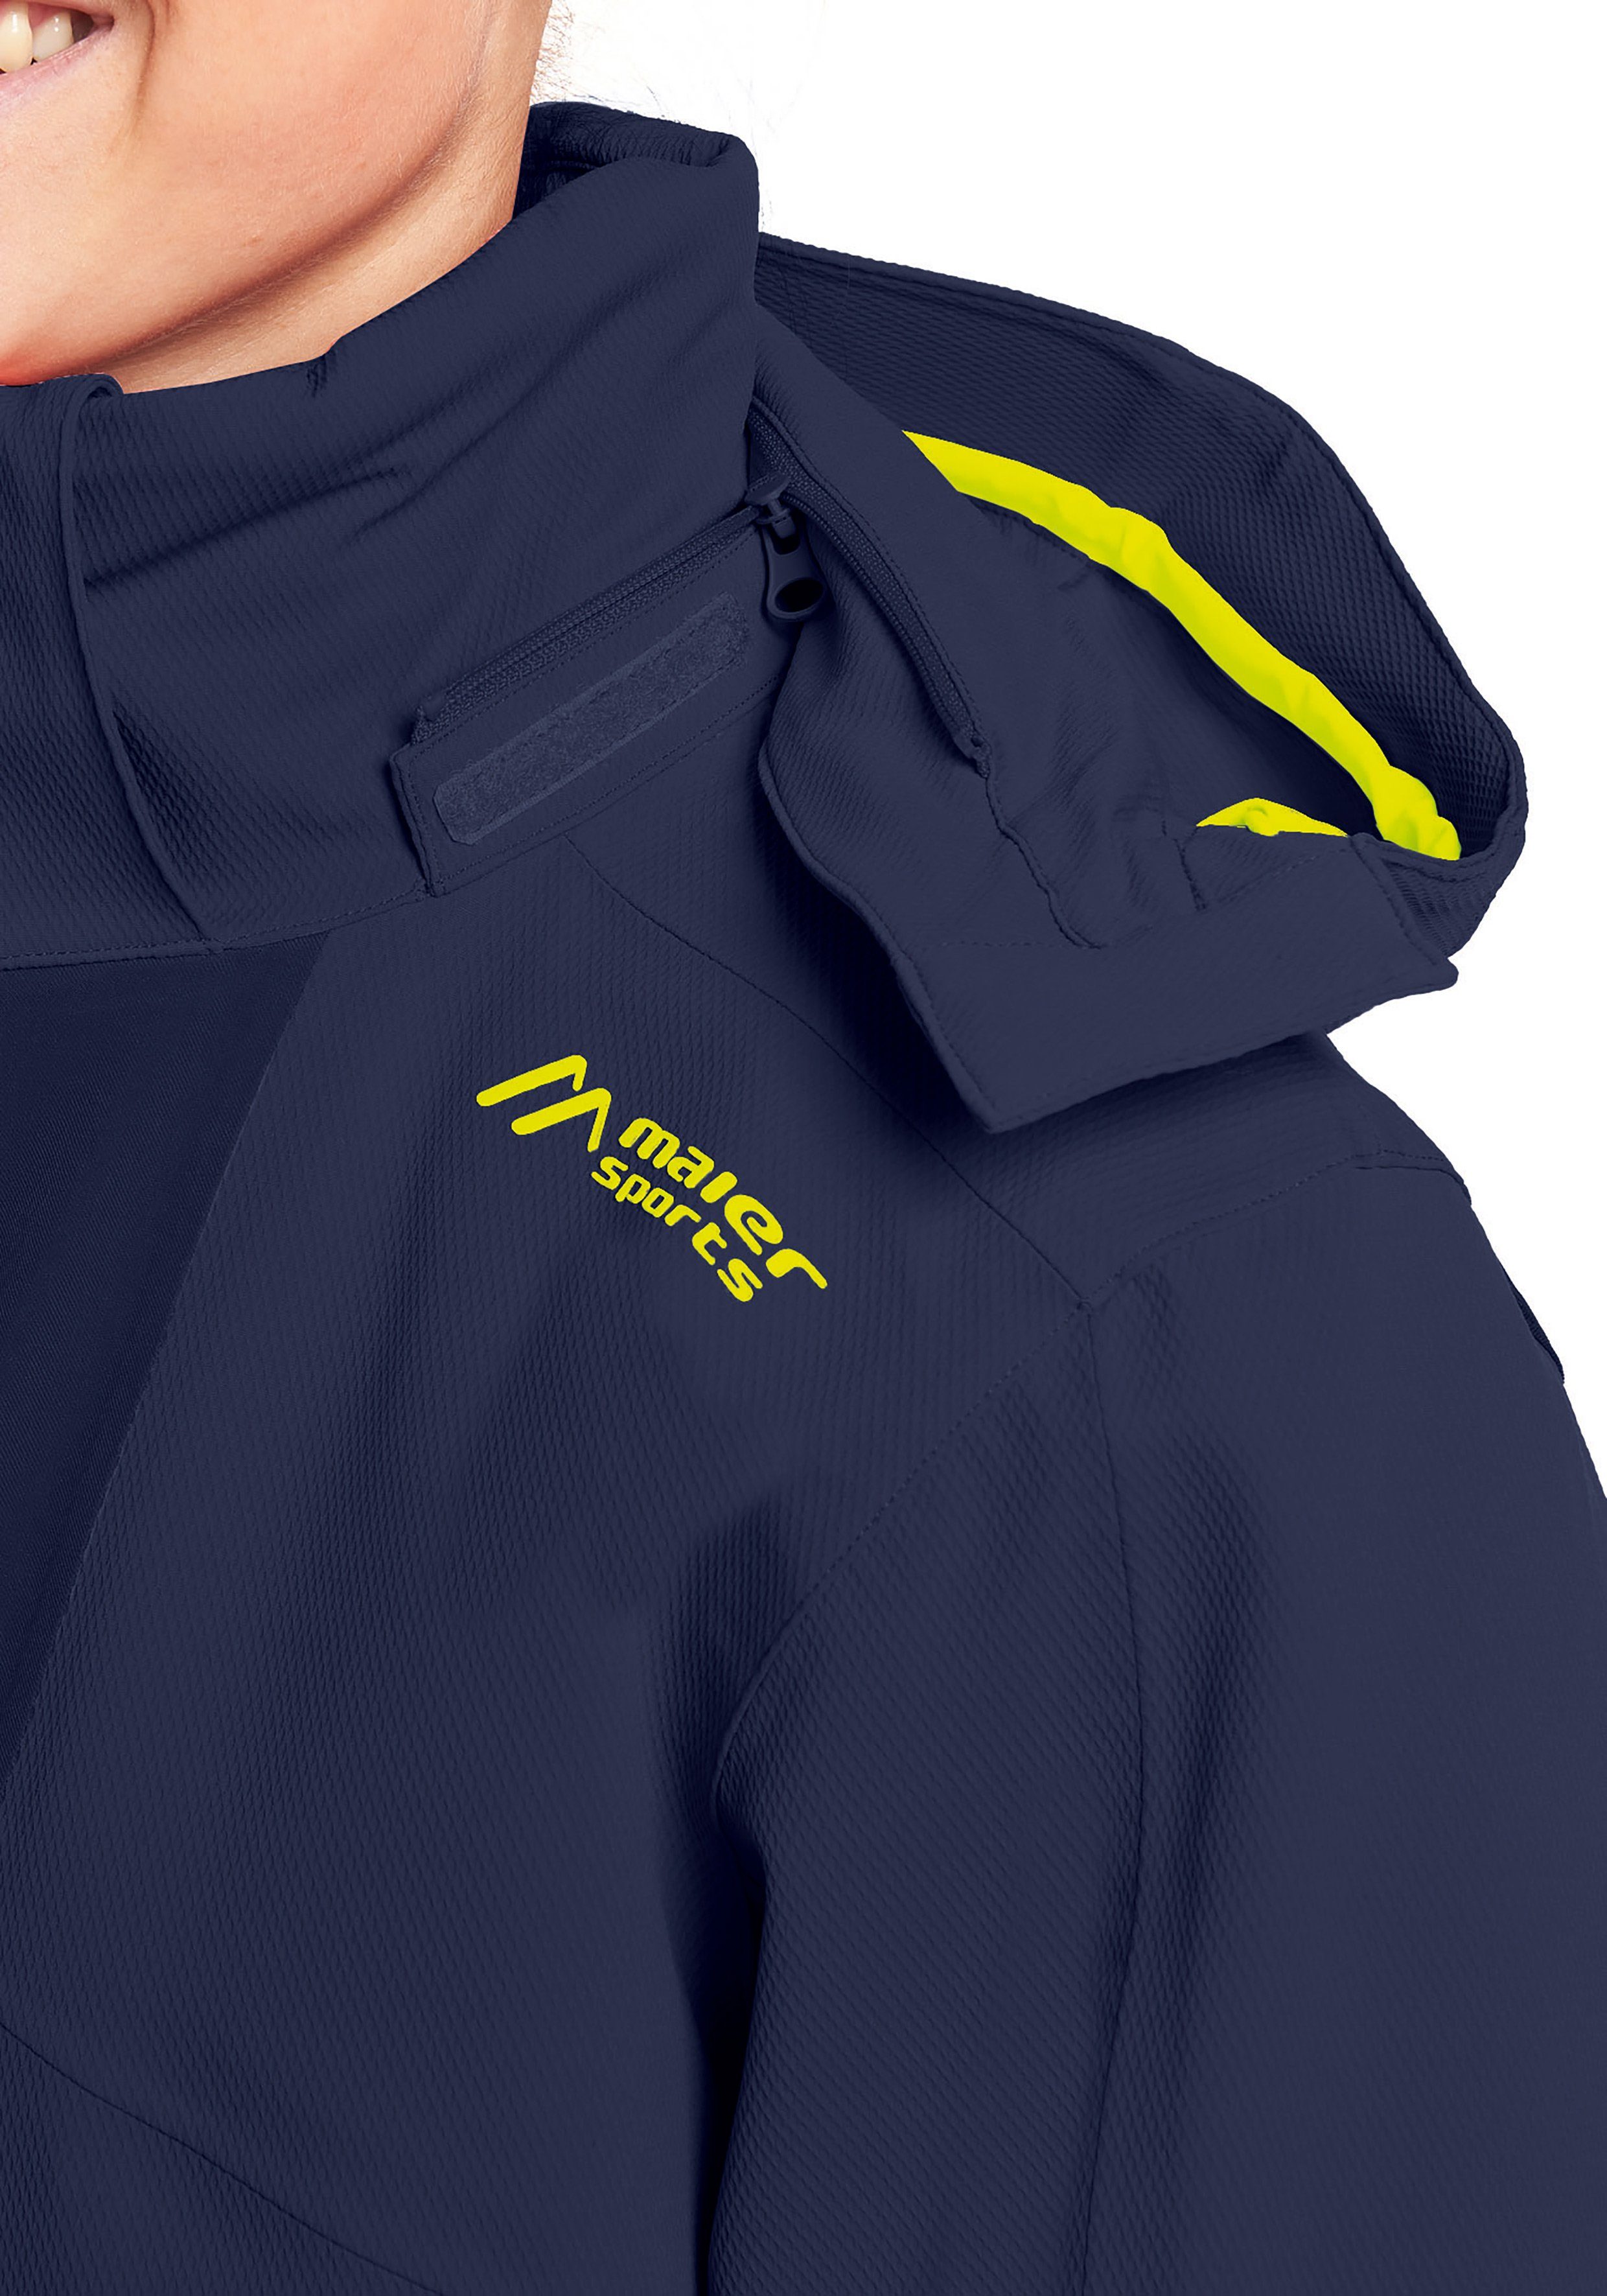 – Skijacke Fast Skijacke Piste Modern Impulse Freeride dunkelblau und designte perfekt für Sports Maier W